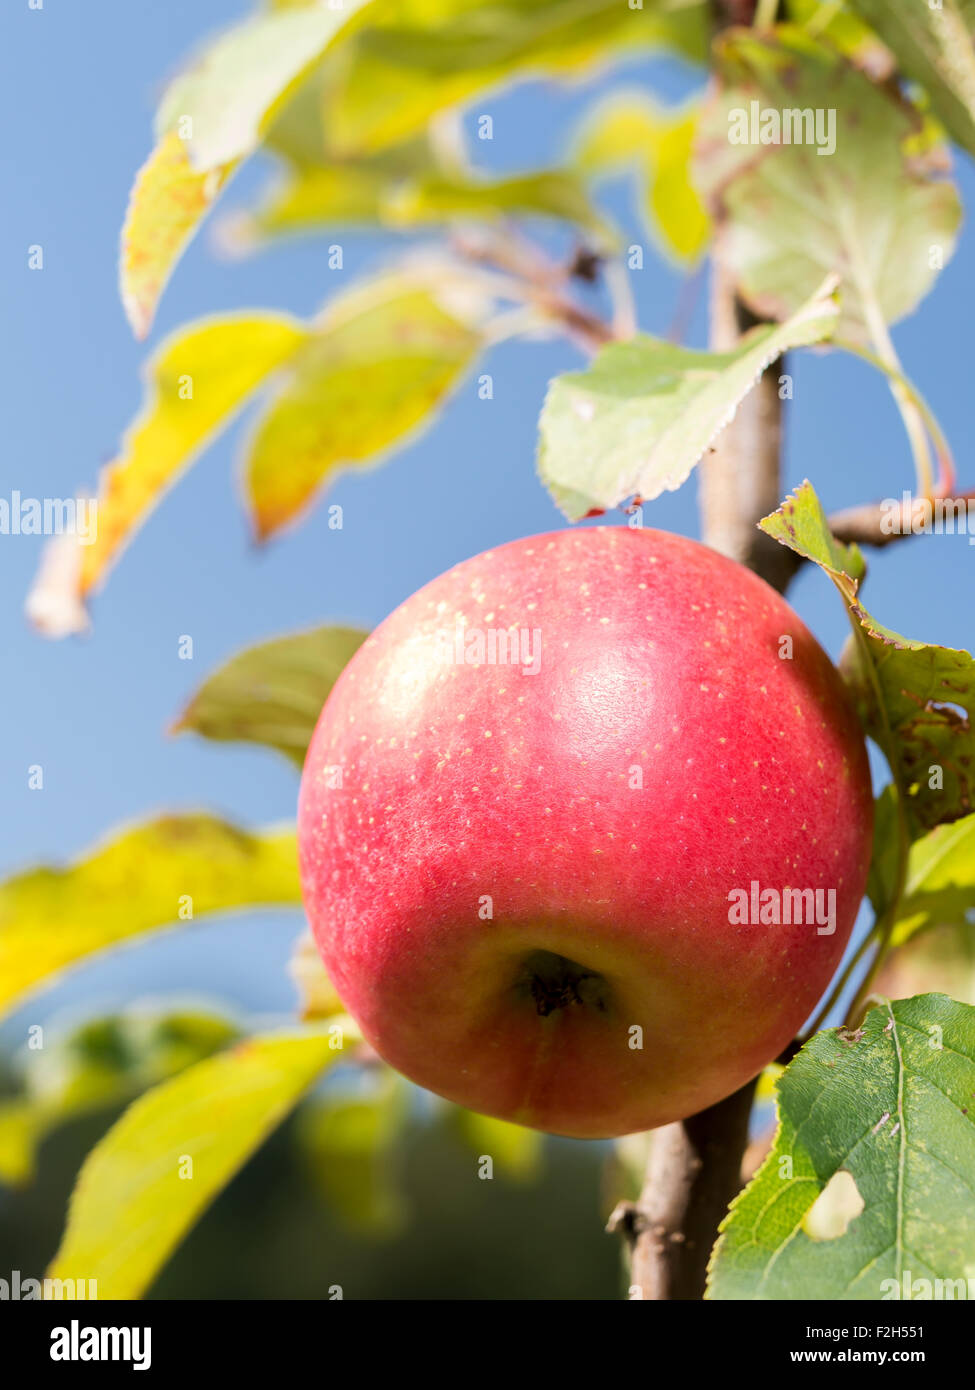 Cox orange pippin apple ripening on tree Stock Photo